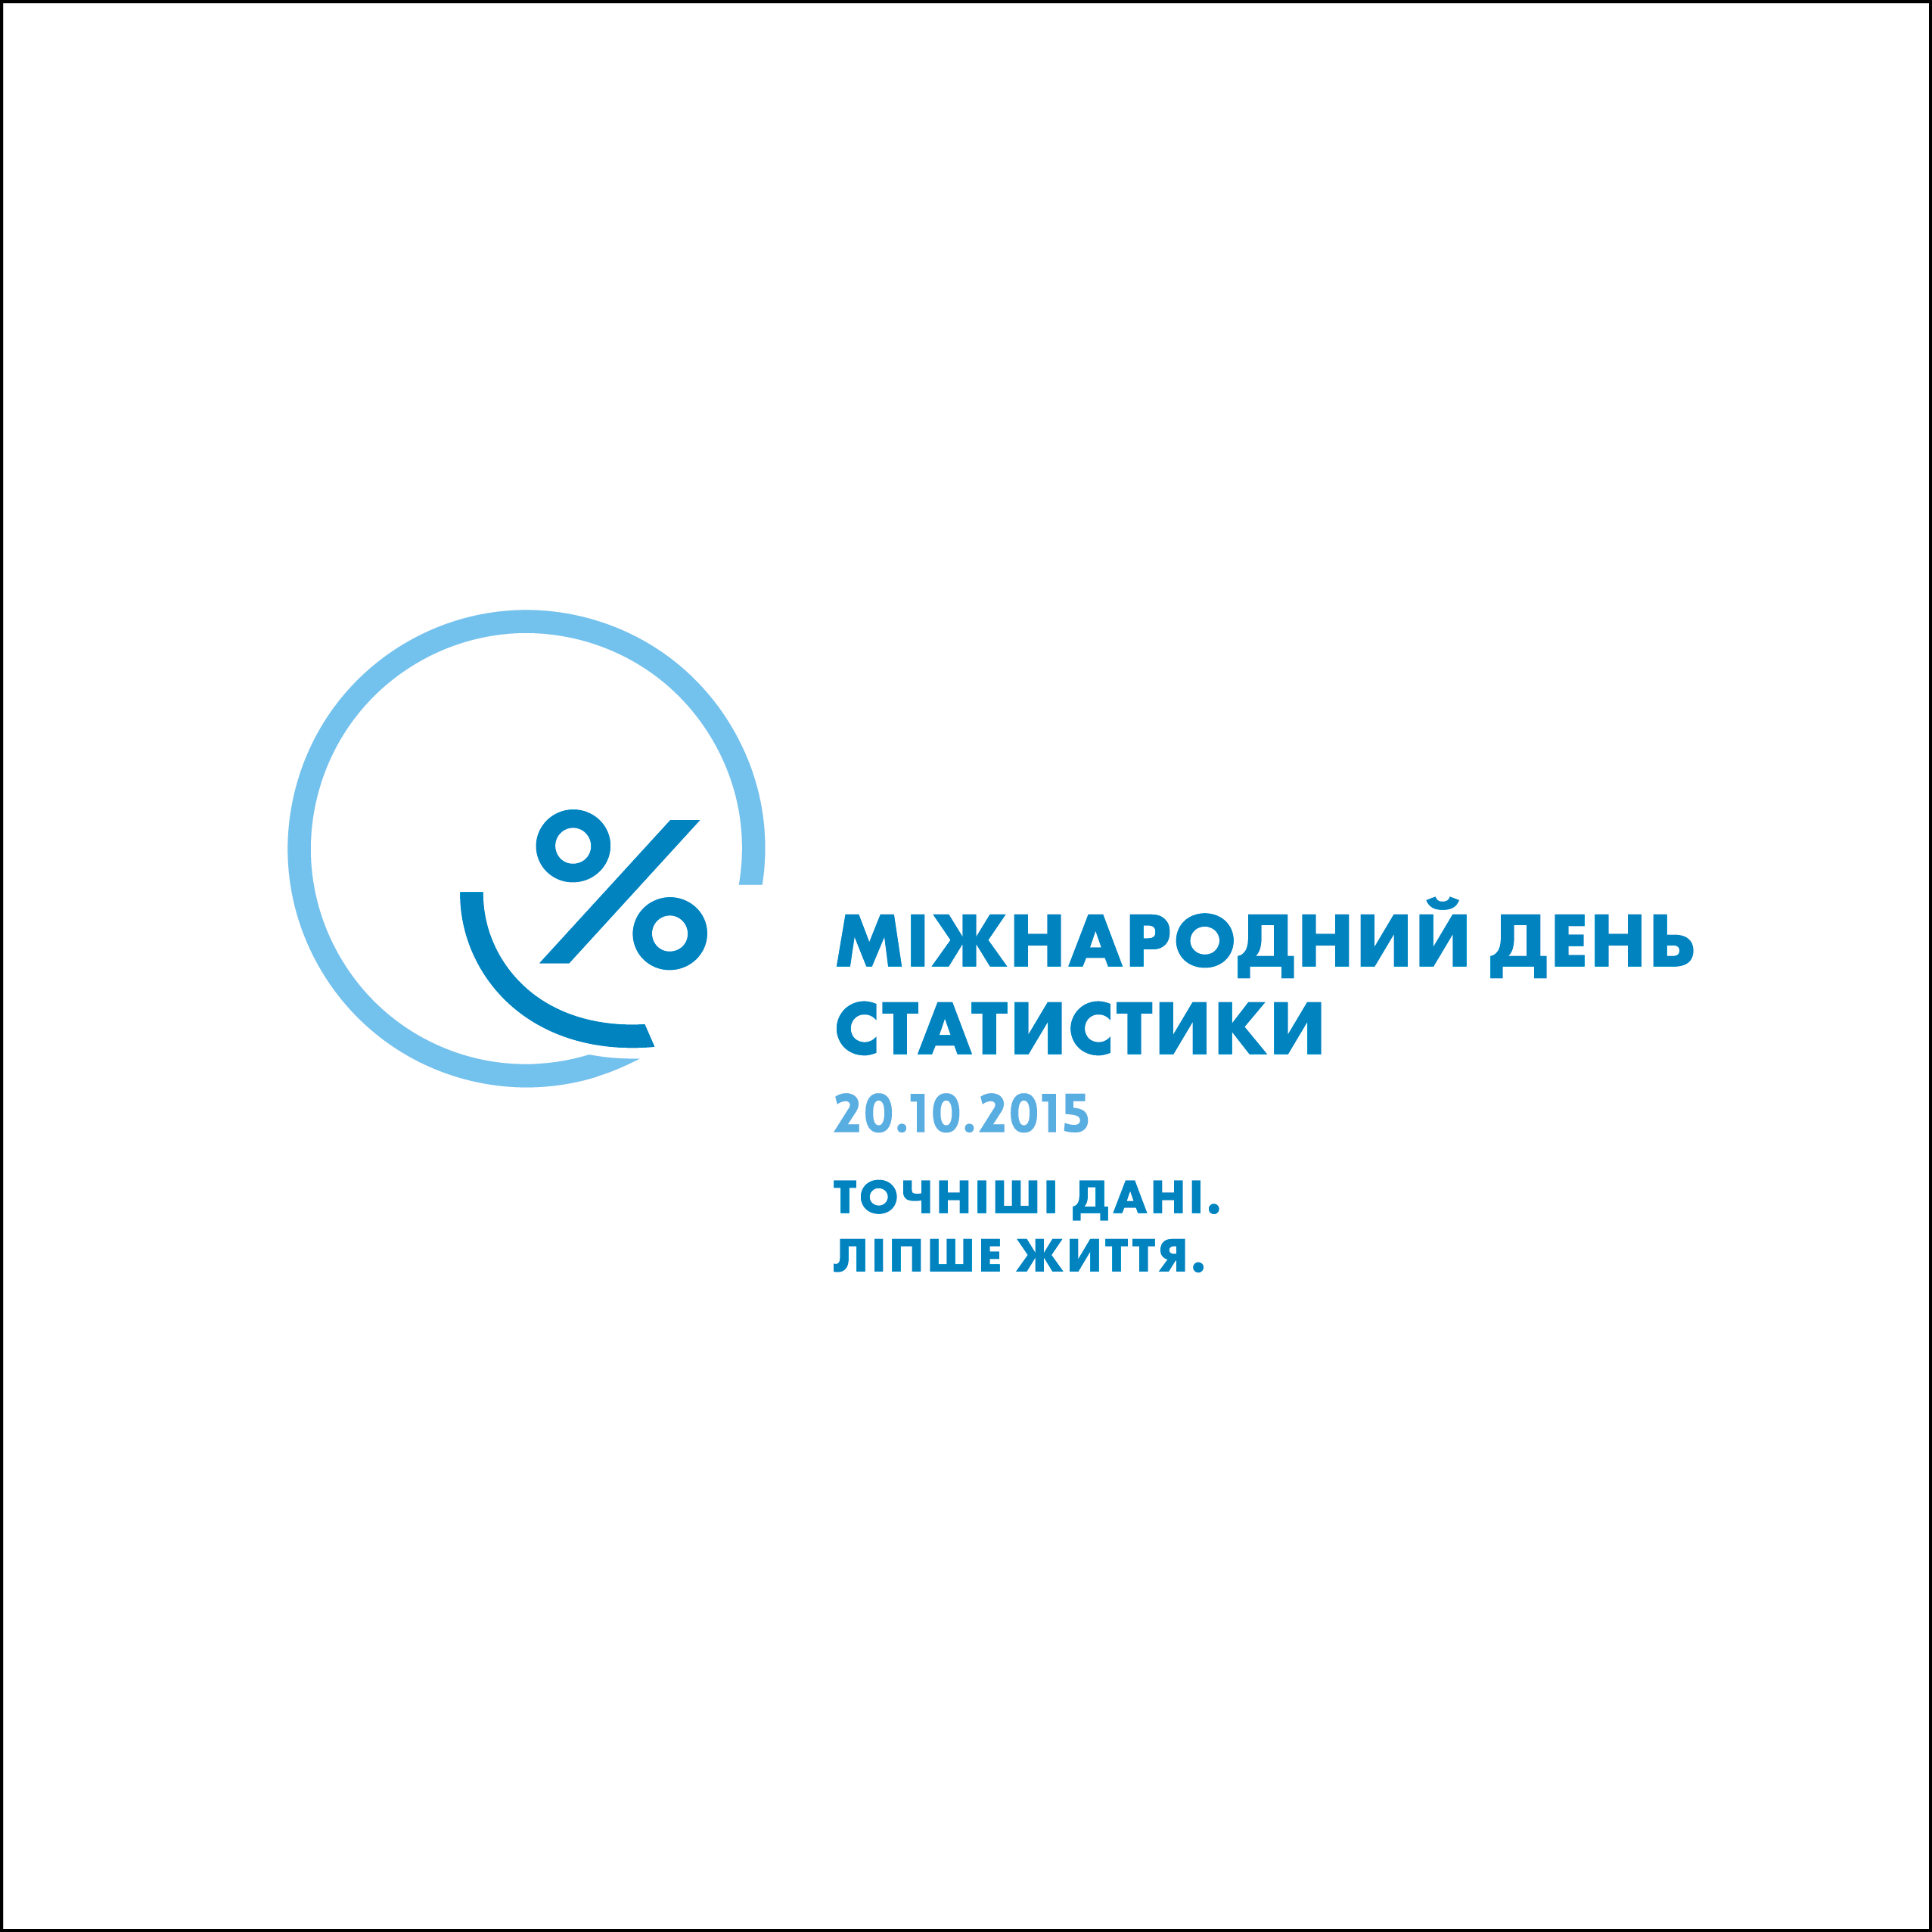 World Statistics Day Logo in Ukranian